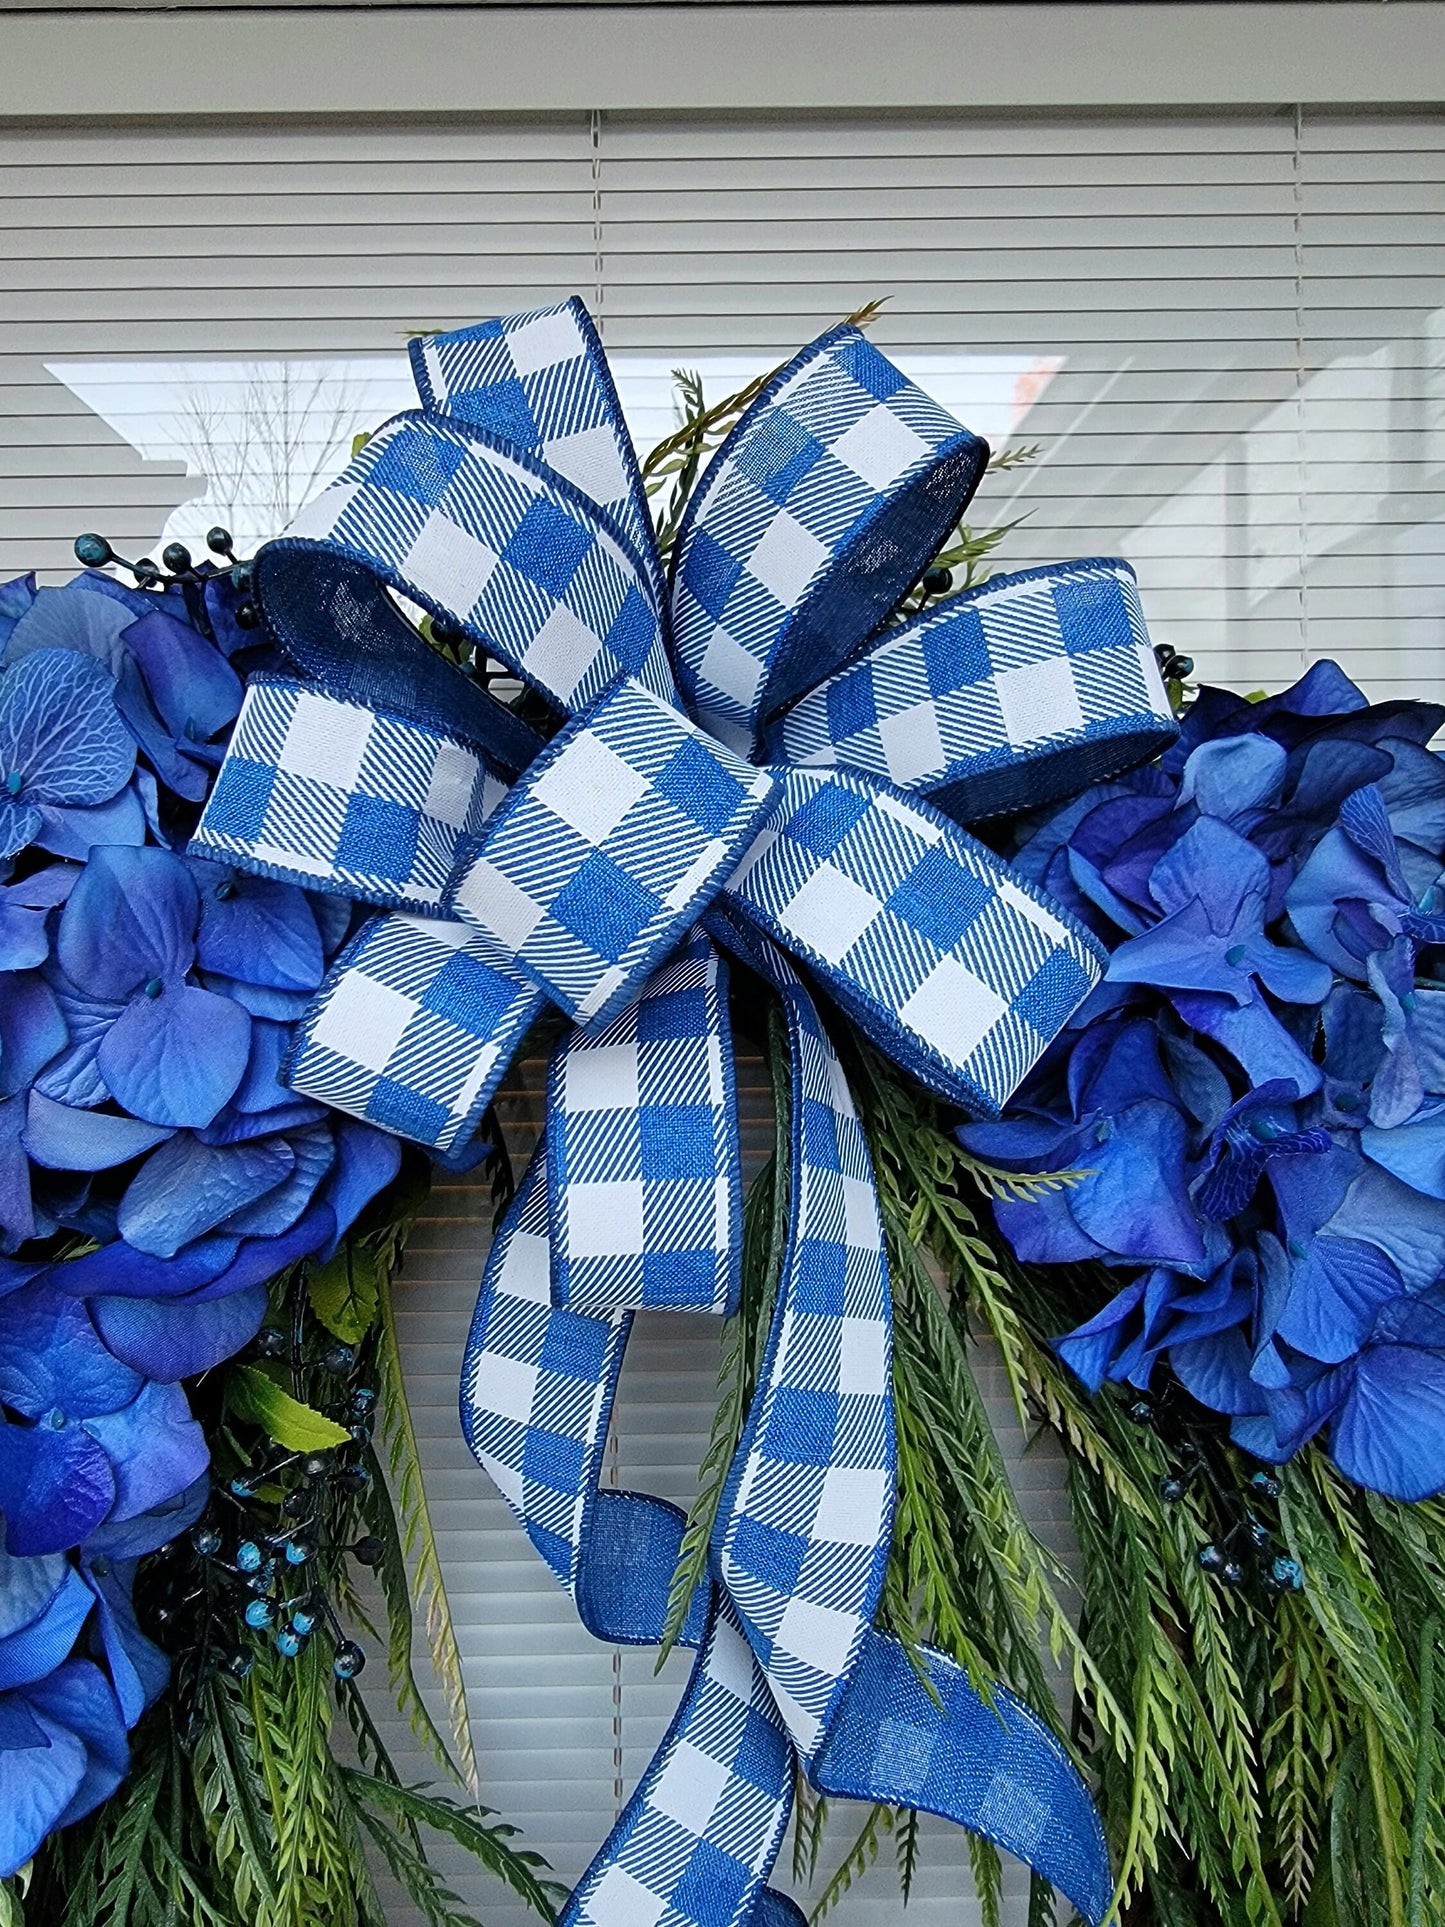 Blue Hydrangea Grapevine Wreath with Bow